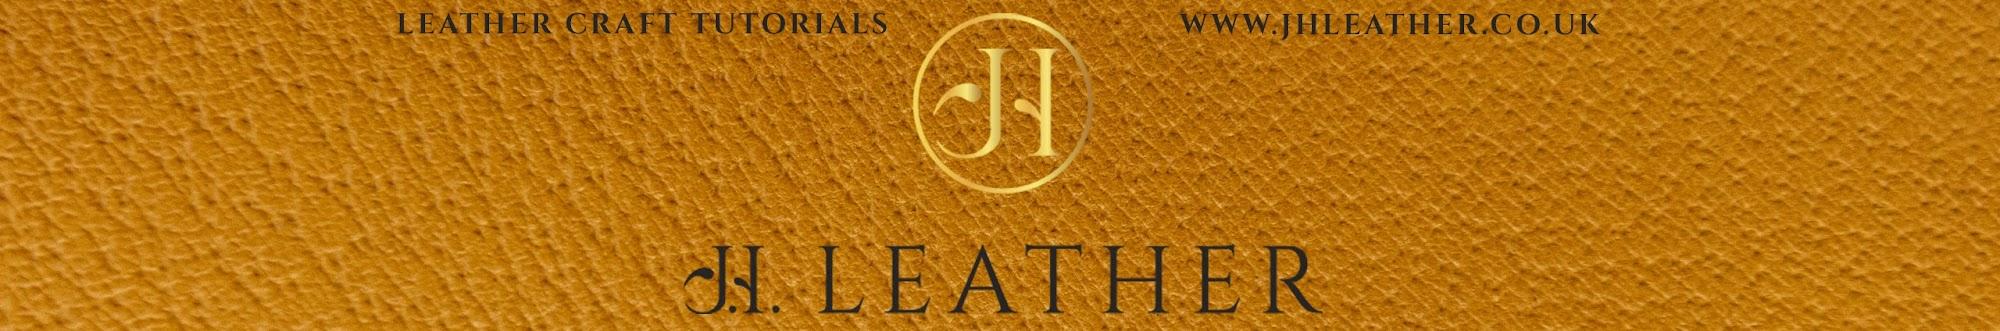 J.H.Leather